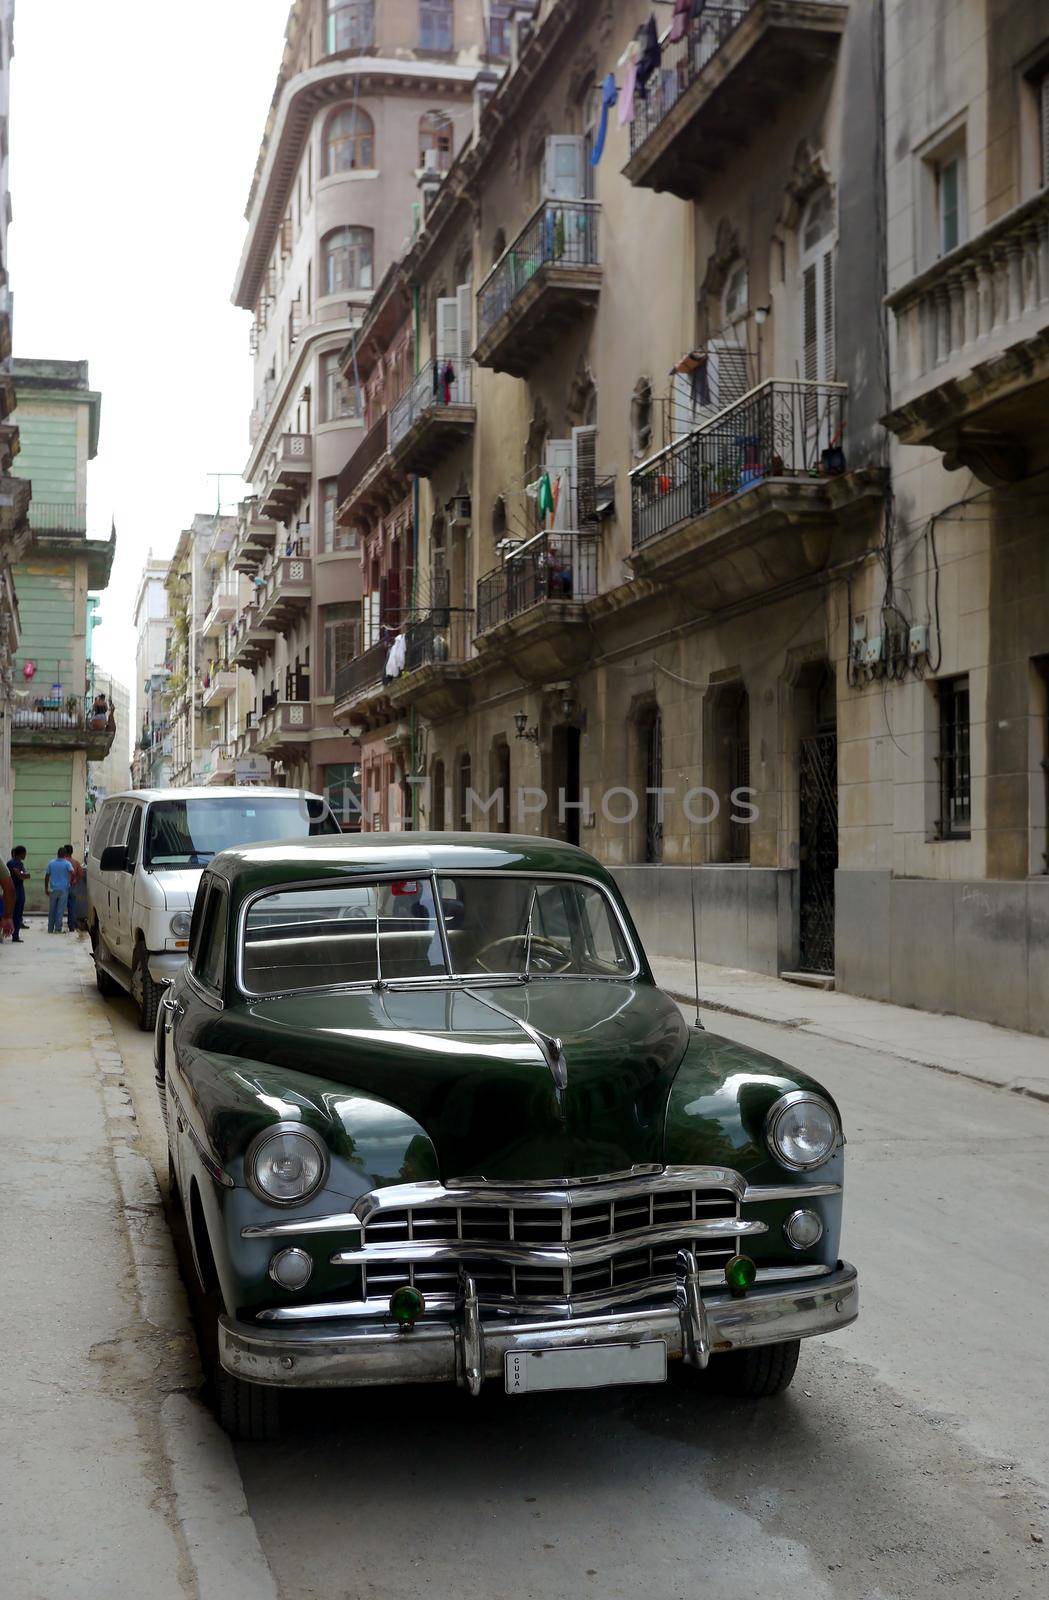 Classic old car in Havana, Cuba